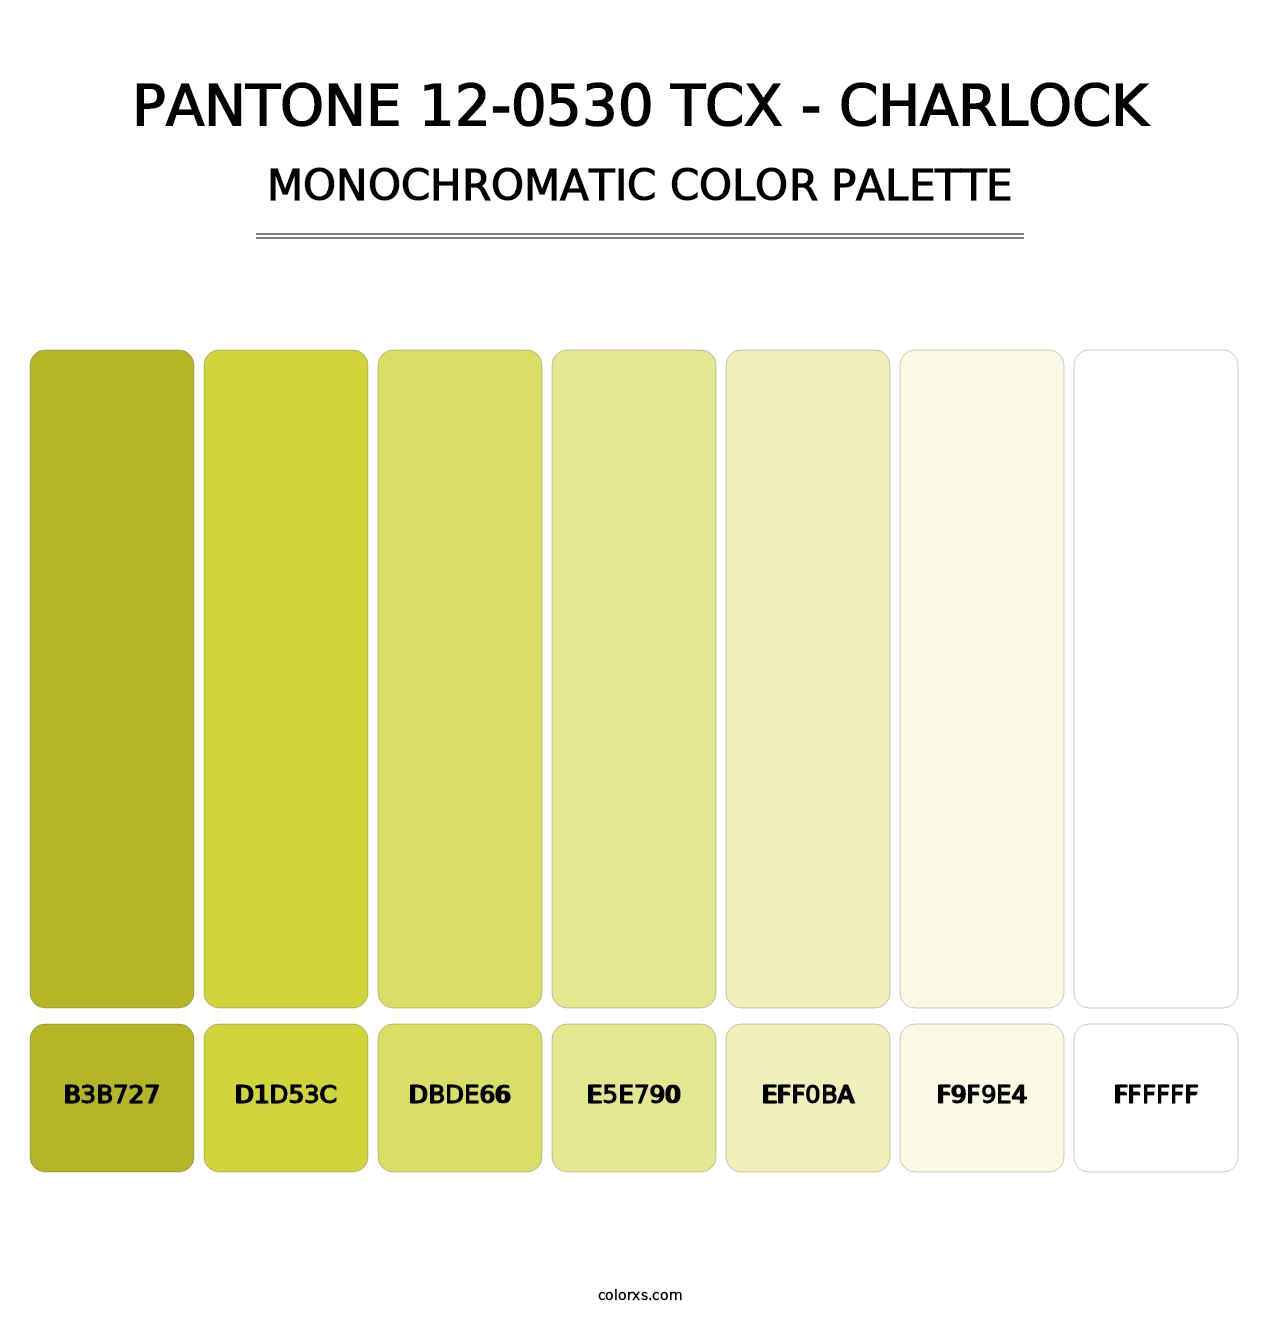 PANTONE 12-0530 TCX - Charlock - Monochromatic Color Palette